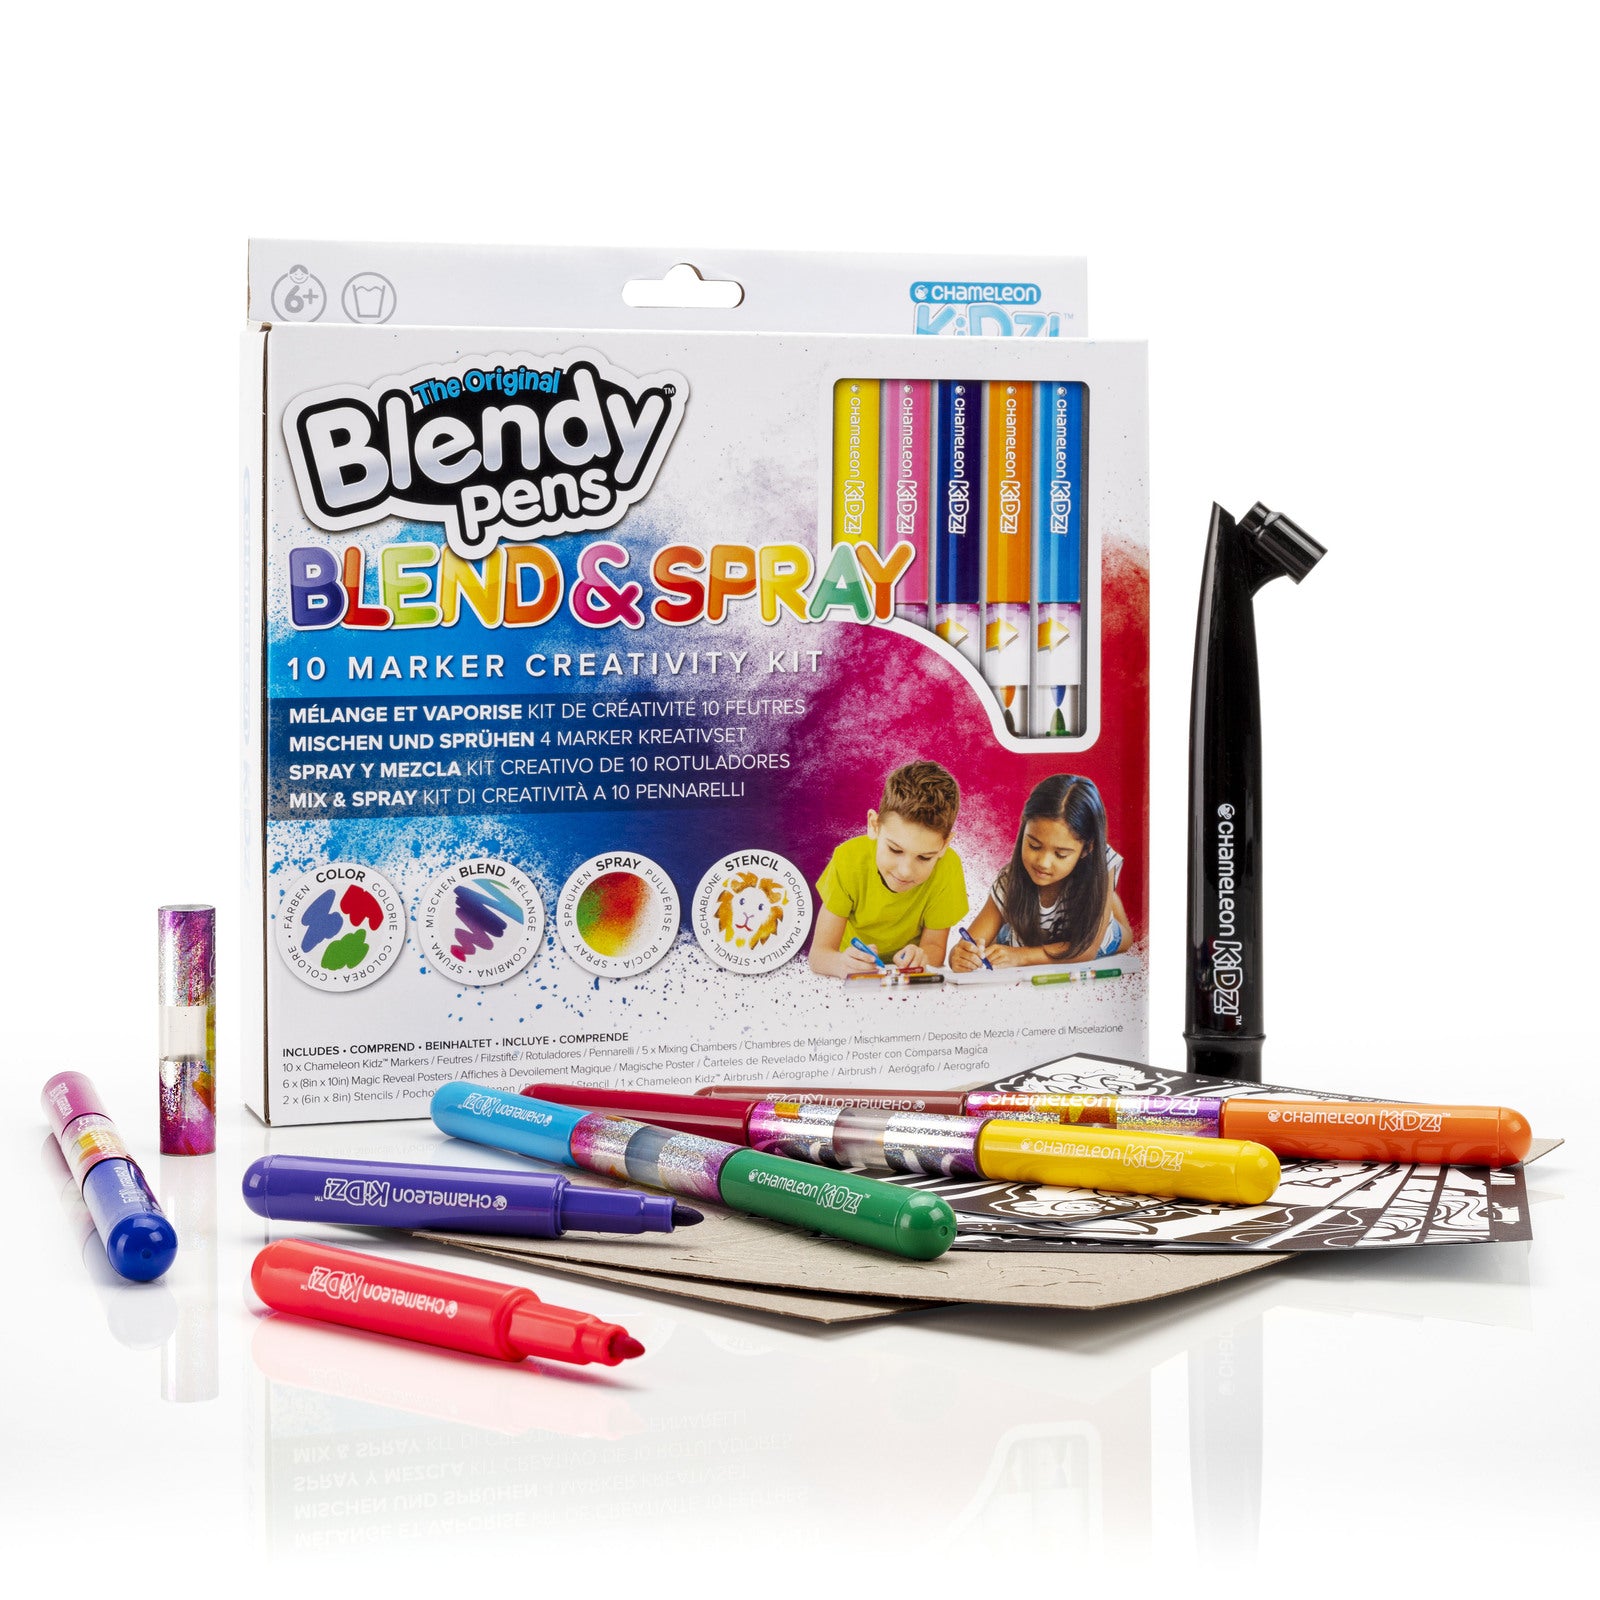 Blendy Pens Blend And Spray 10 Marker Creativity Kit